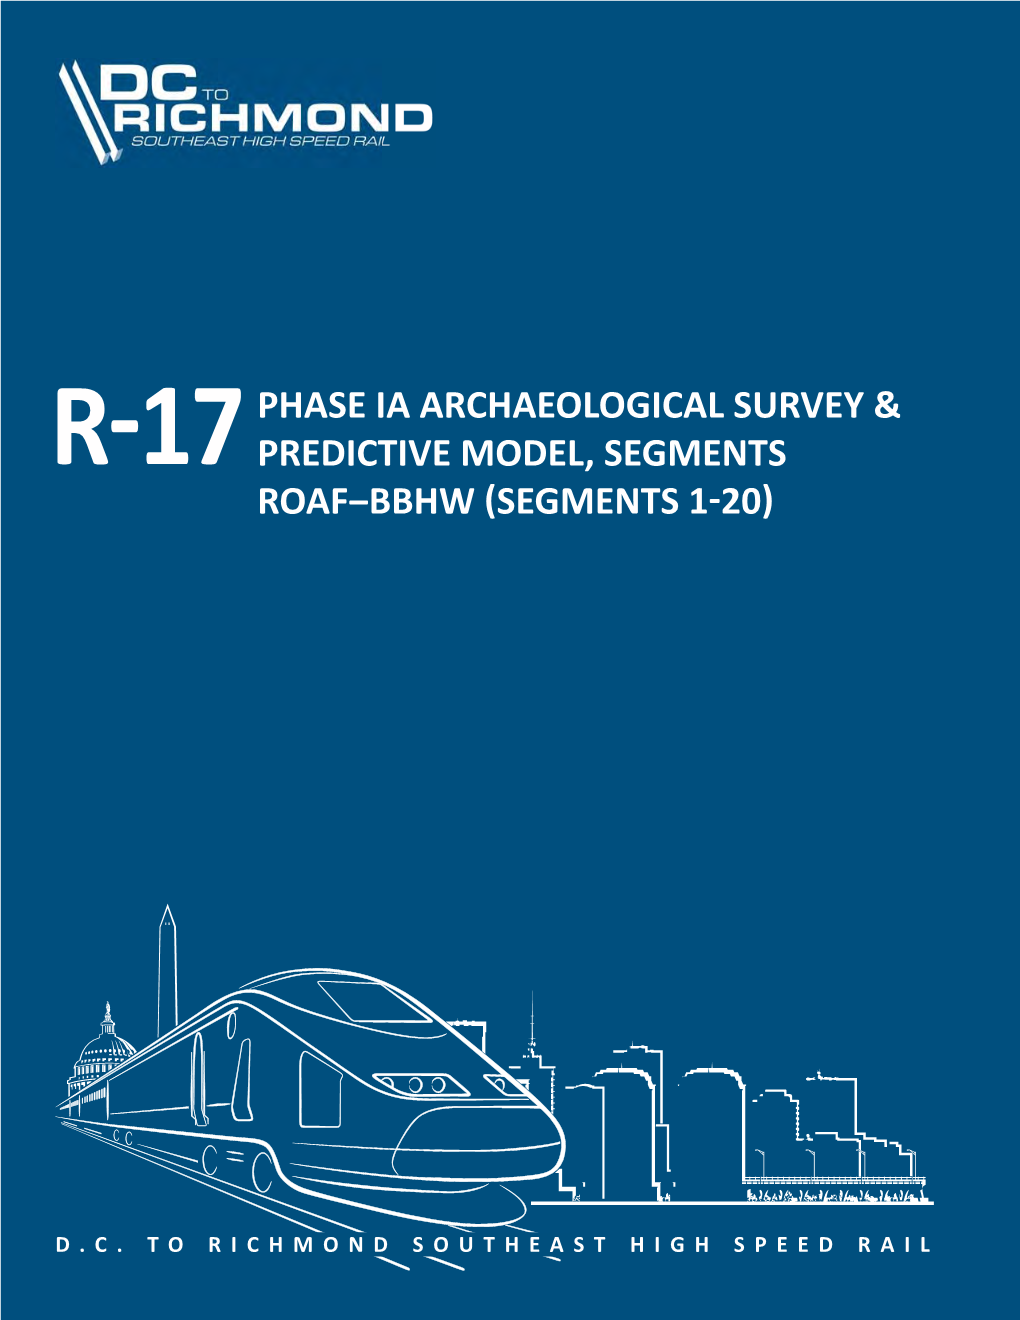 Phase Ia Archaeological Survey & Predictive Model